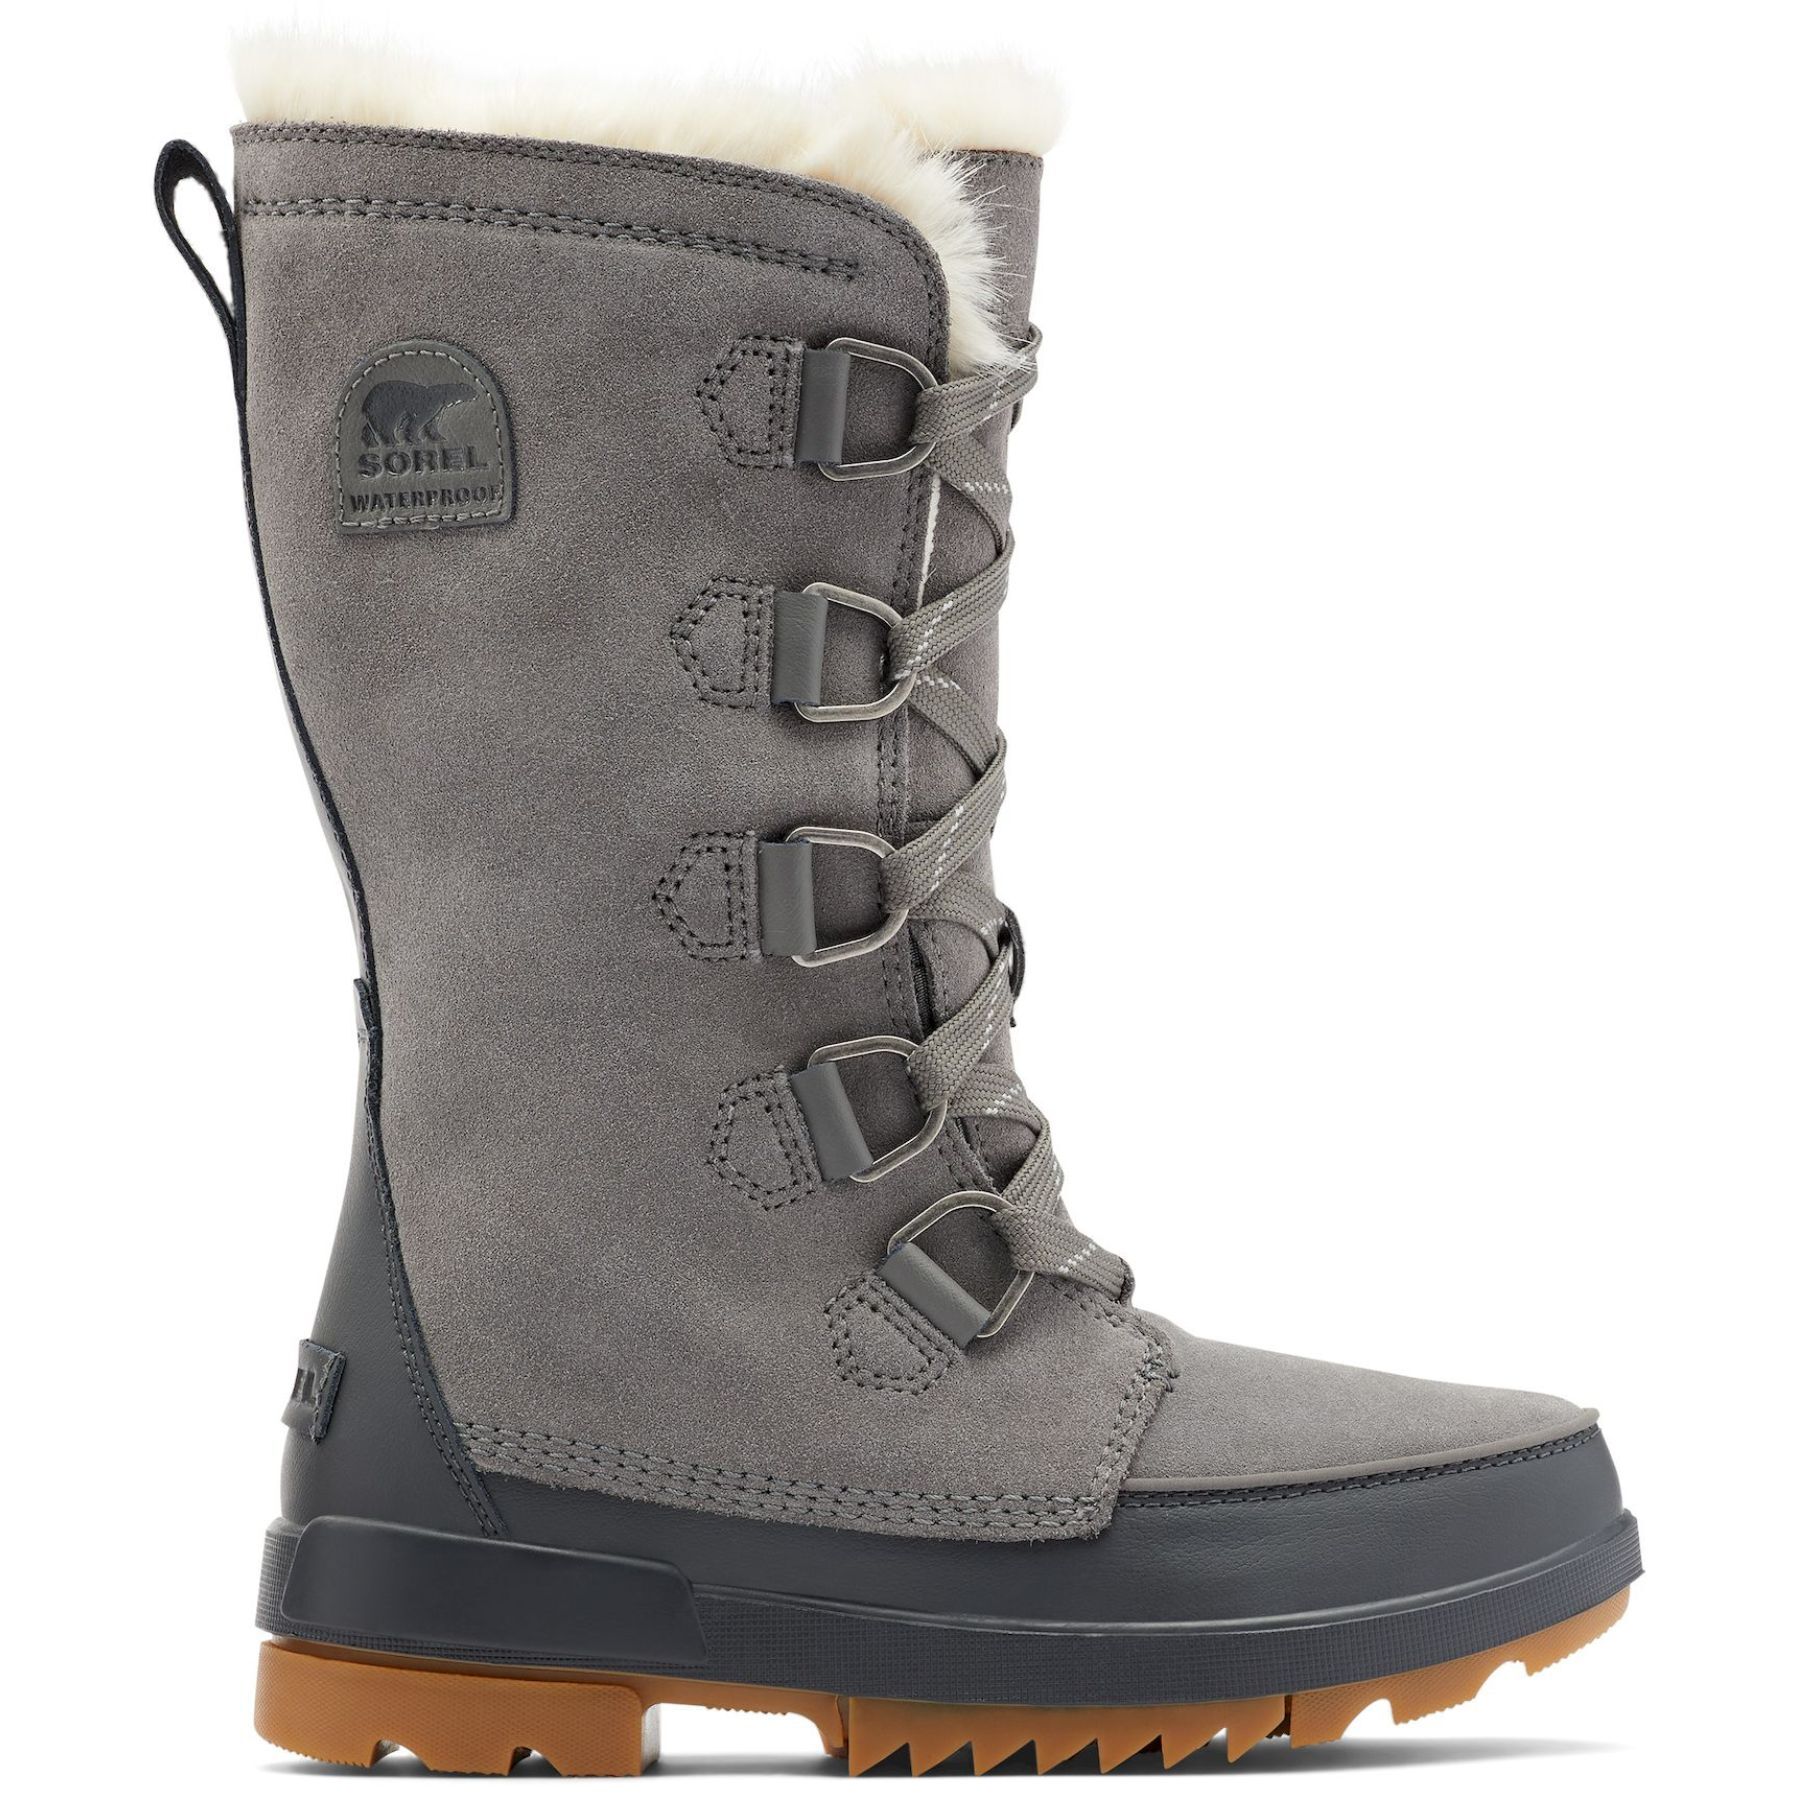 Sorel Torino II Tall - Winter boots - Women's